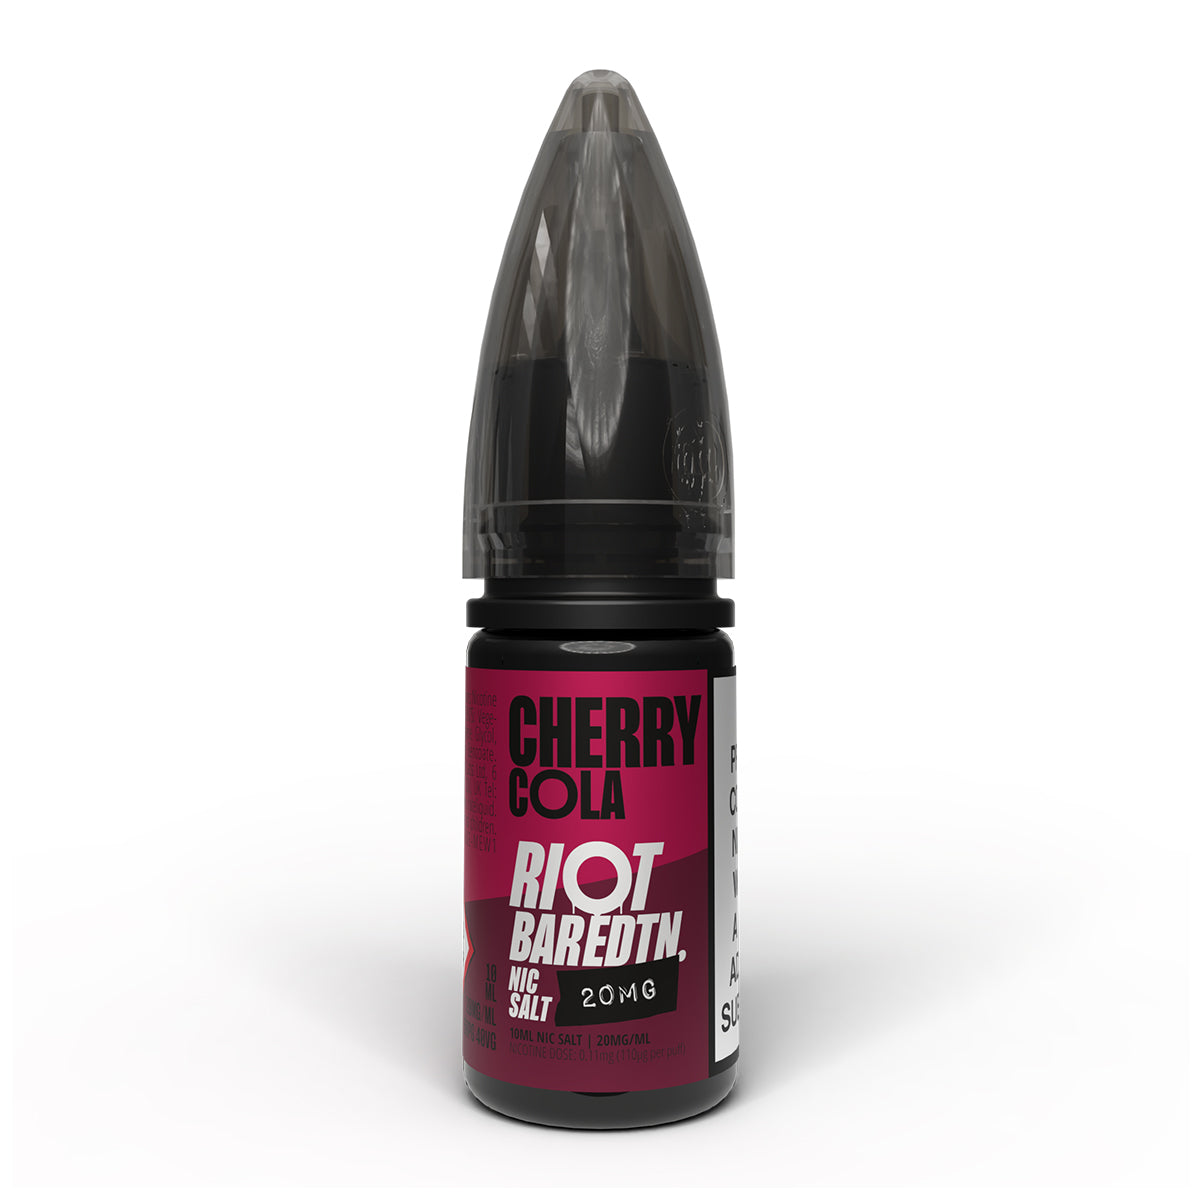 Cherry Cola 10ml Nicotine Salt 20mg by Riot Bar Edtn